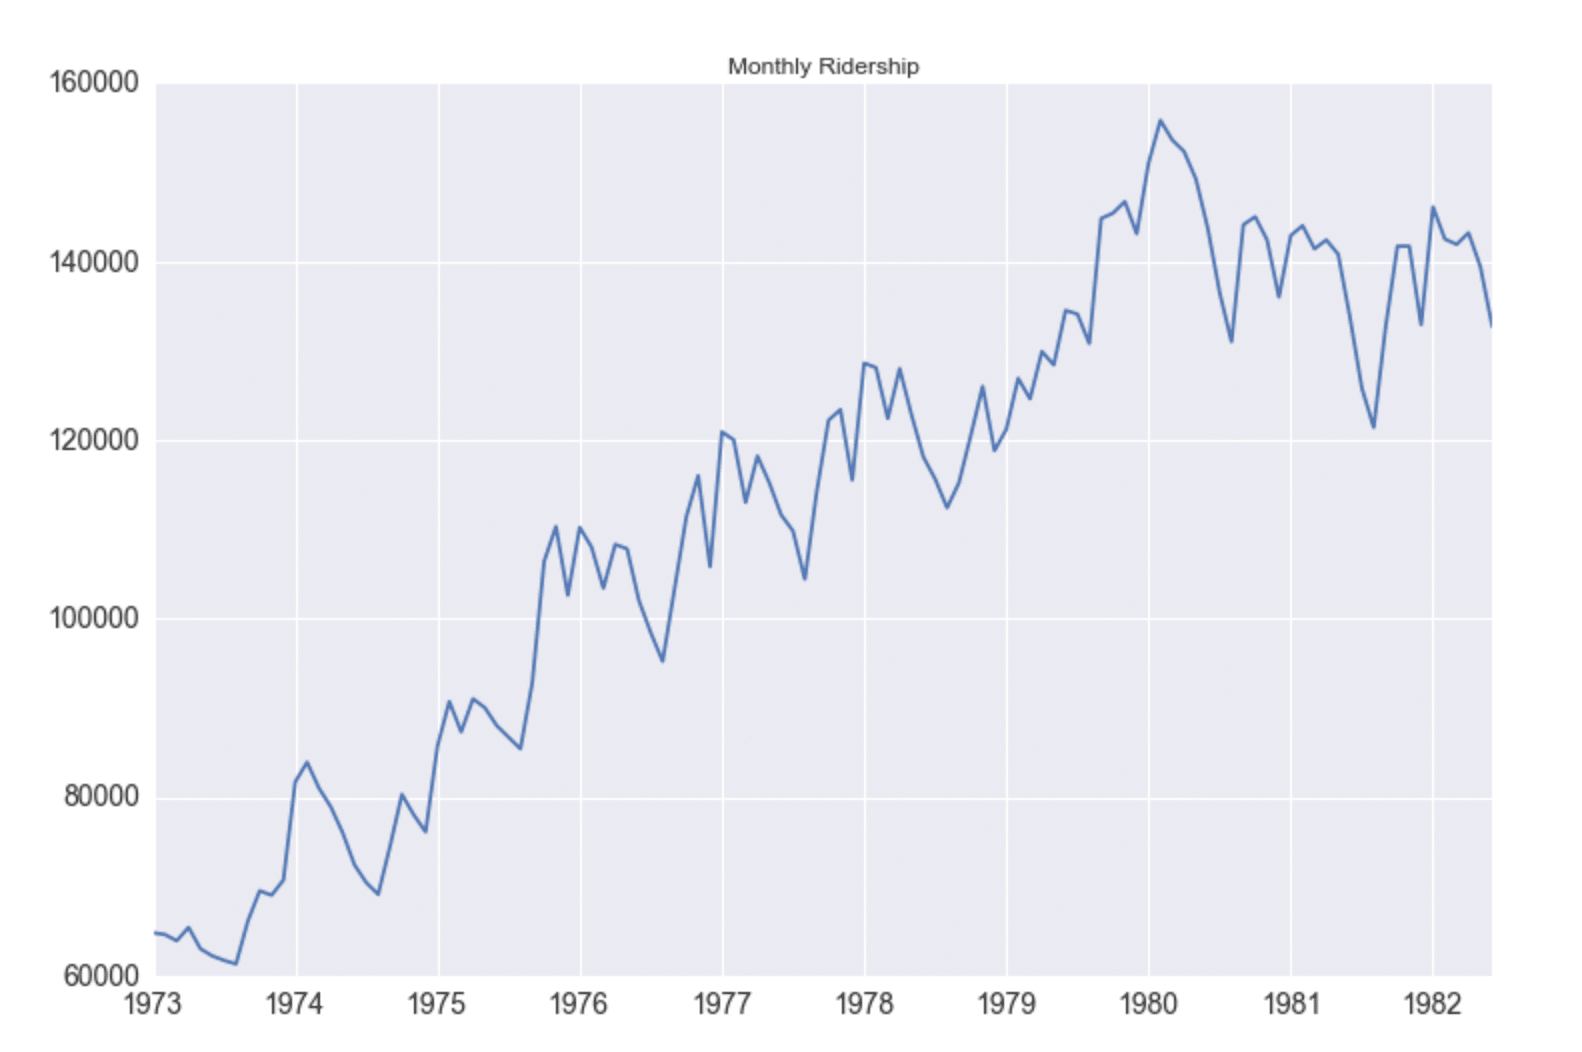 Monthly Ridership vs. Year. Source: Seasonal ARIMA with Python